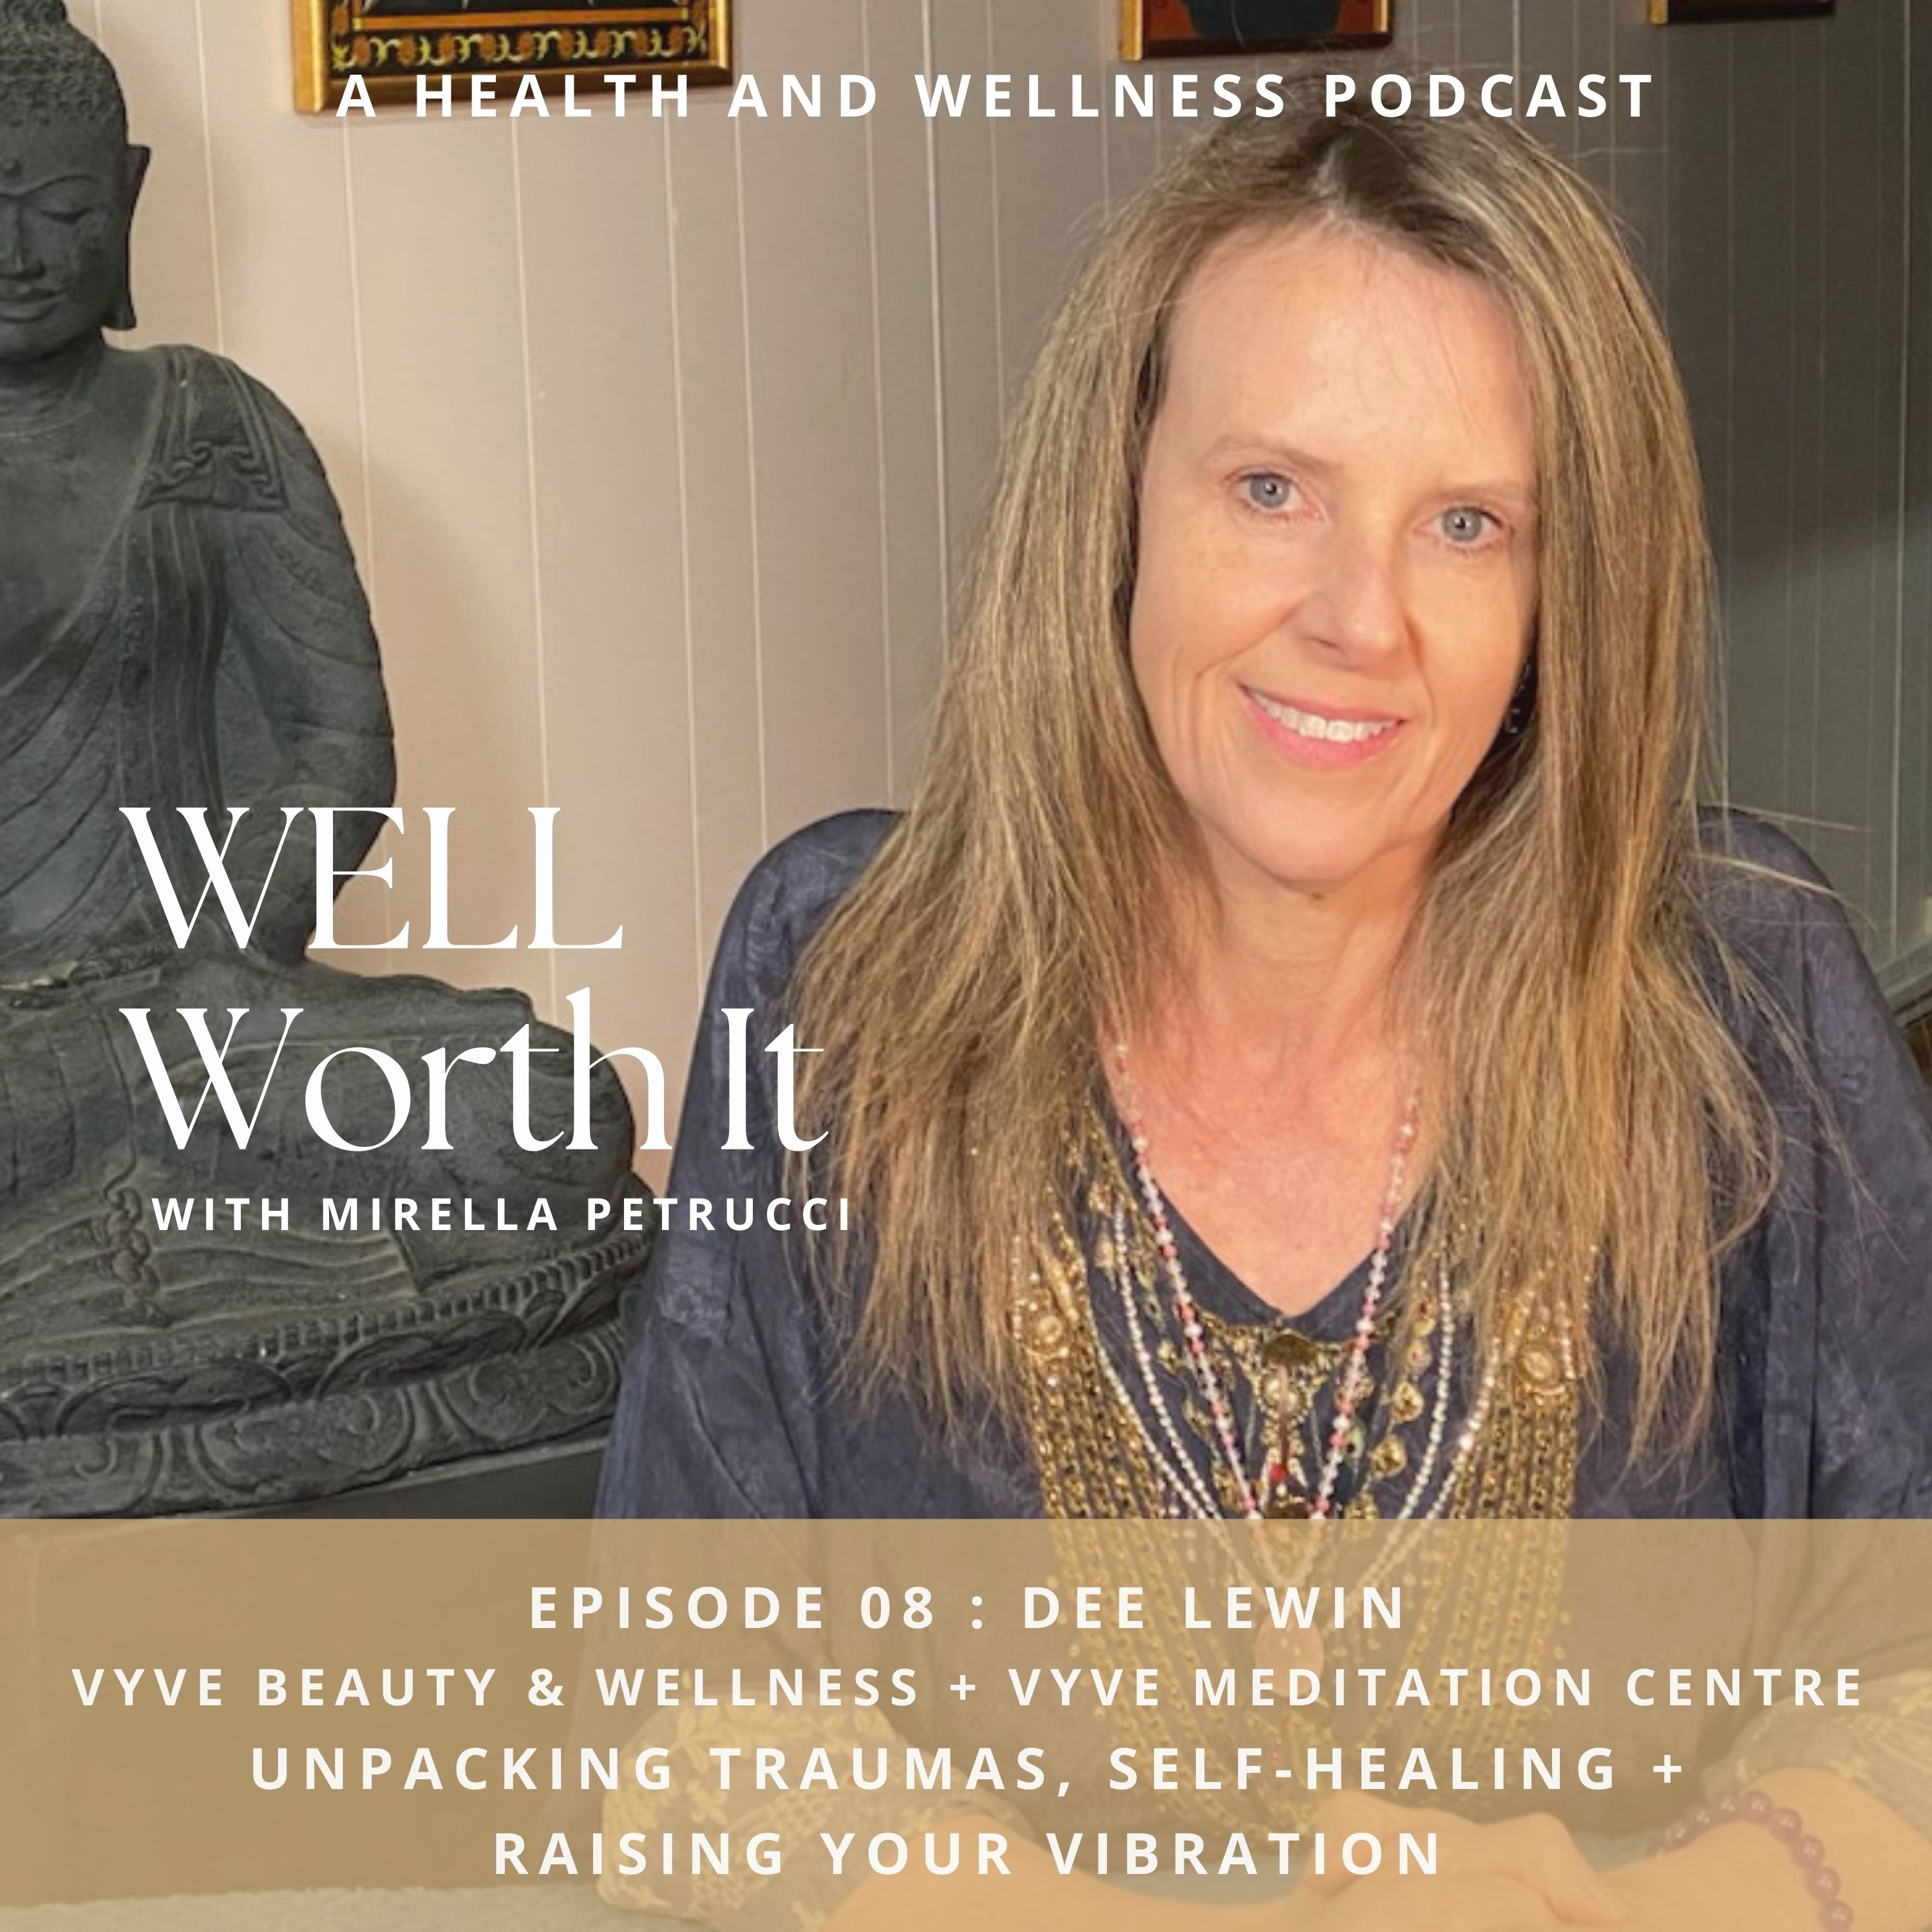 Dee Lewin | Unpacking Traumas, Self-Healing + Raising Your Vibration